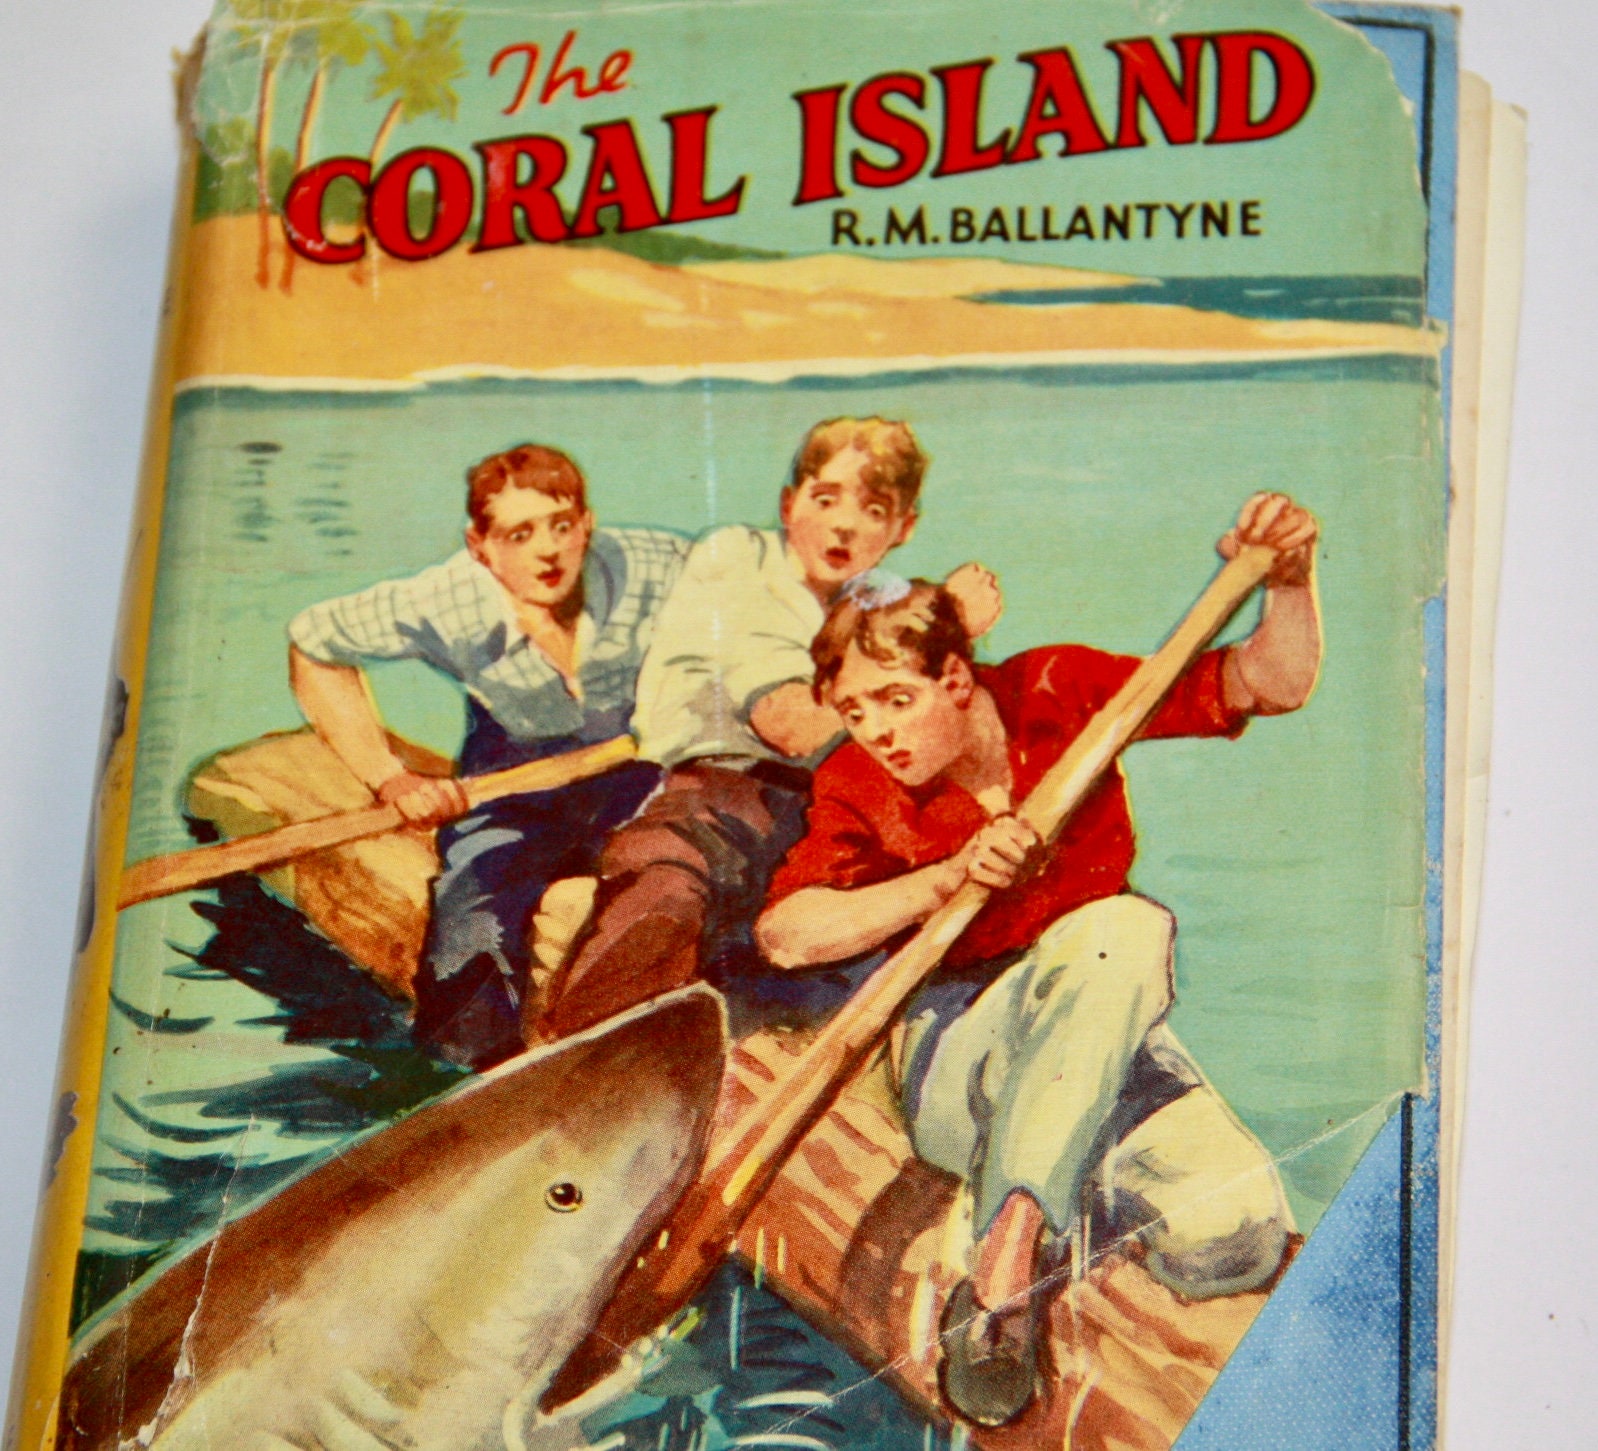 The Coral Island R M Ballantyne 1930's Publication Juvenile Productions LTD  London Vintage Publication Vintage Book Complete Used With Wear 